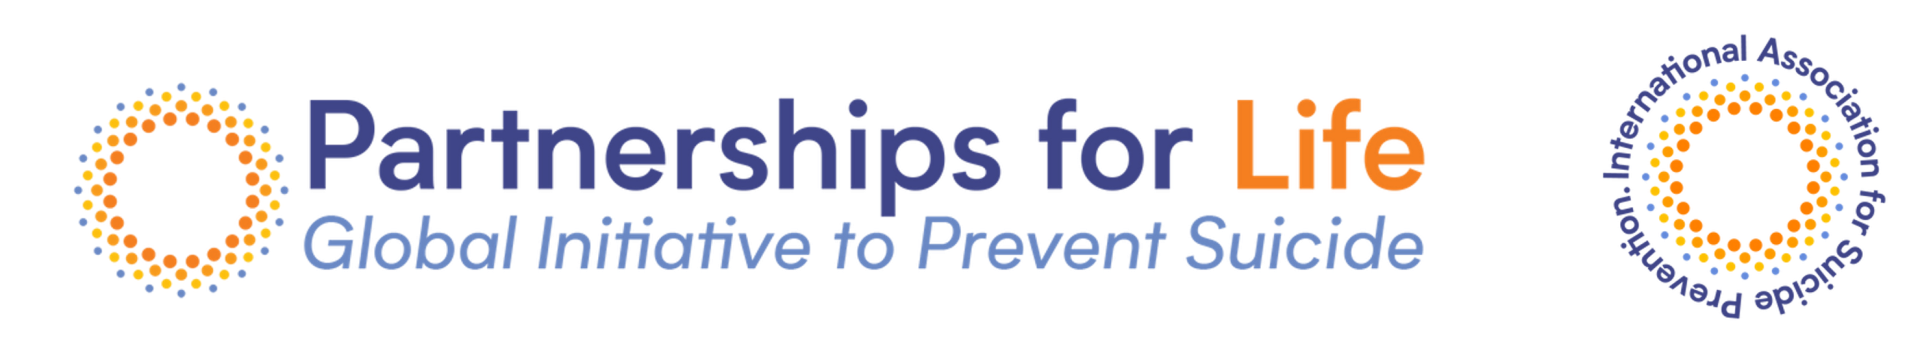 Partnerships for life logo